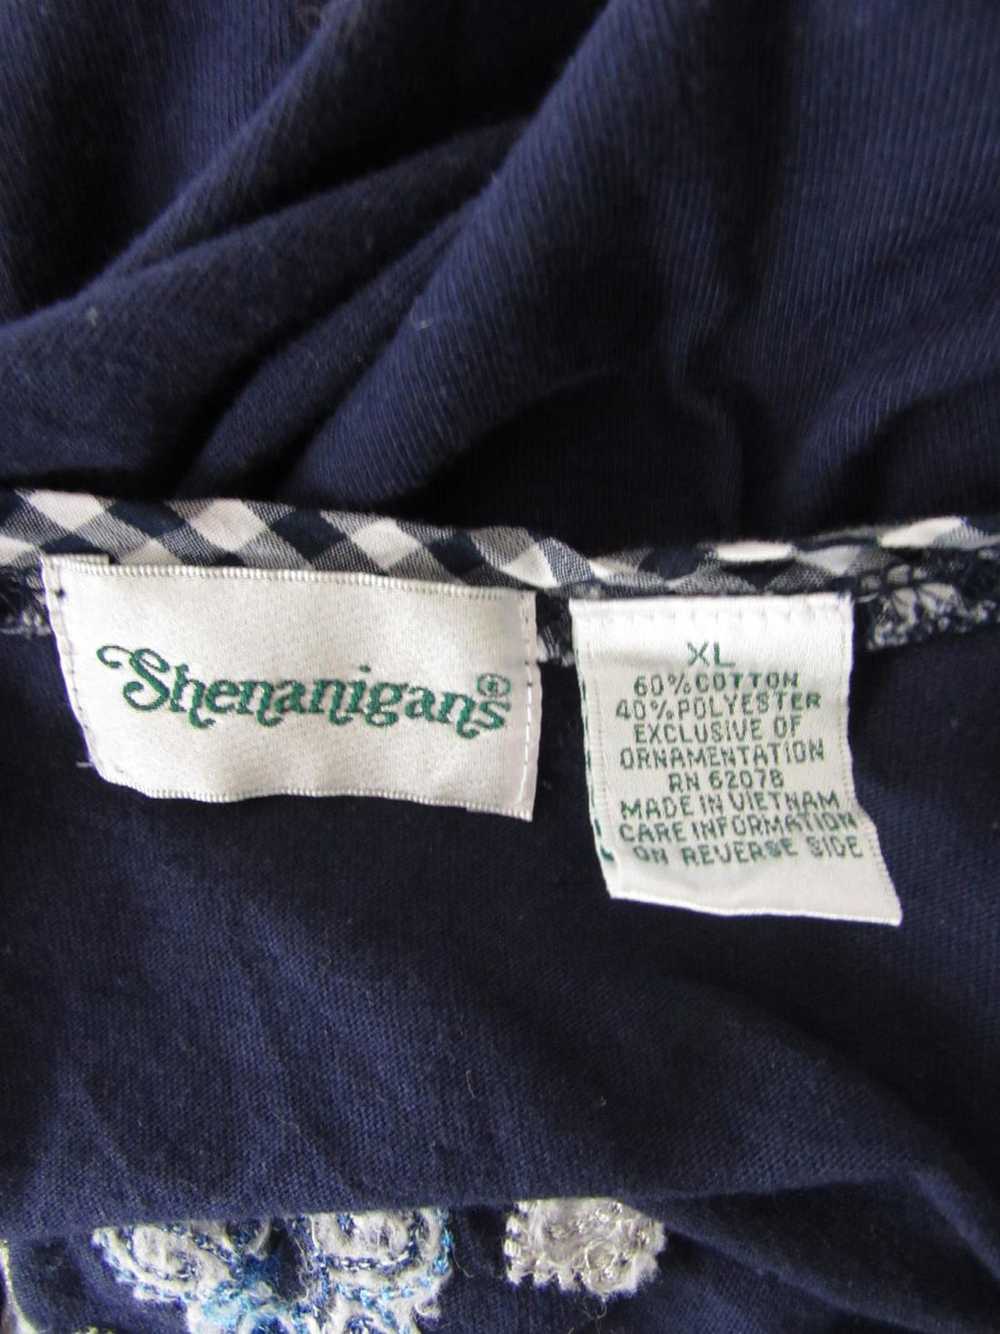 Shenanigans Knit Top - image 3